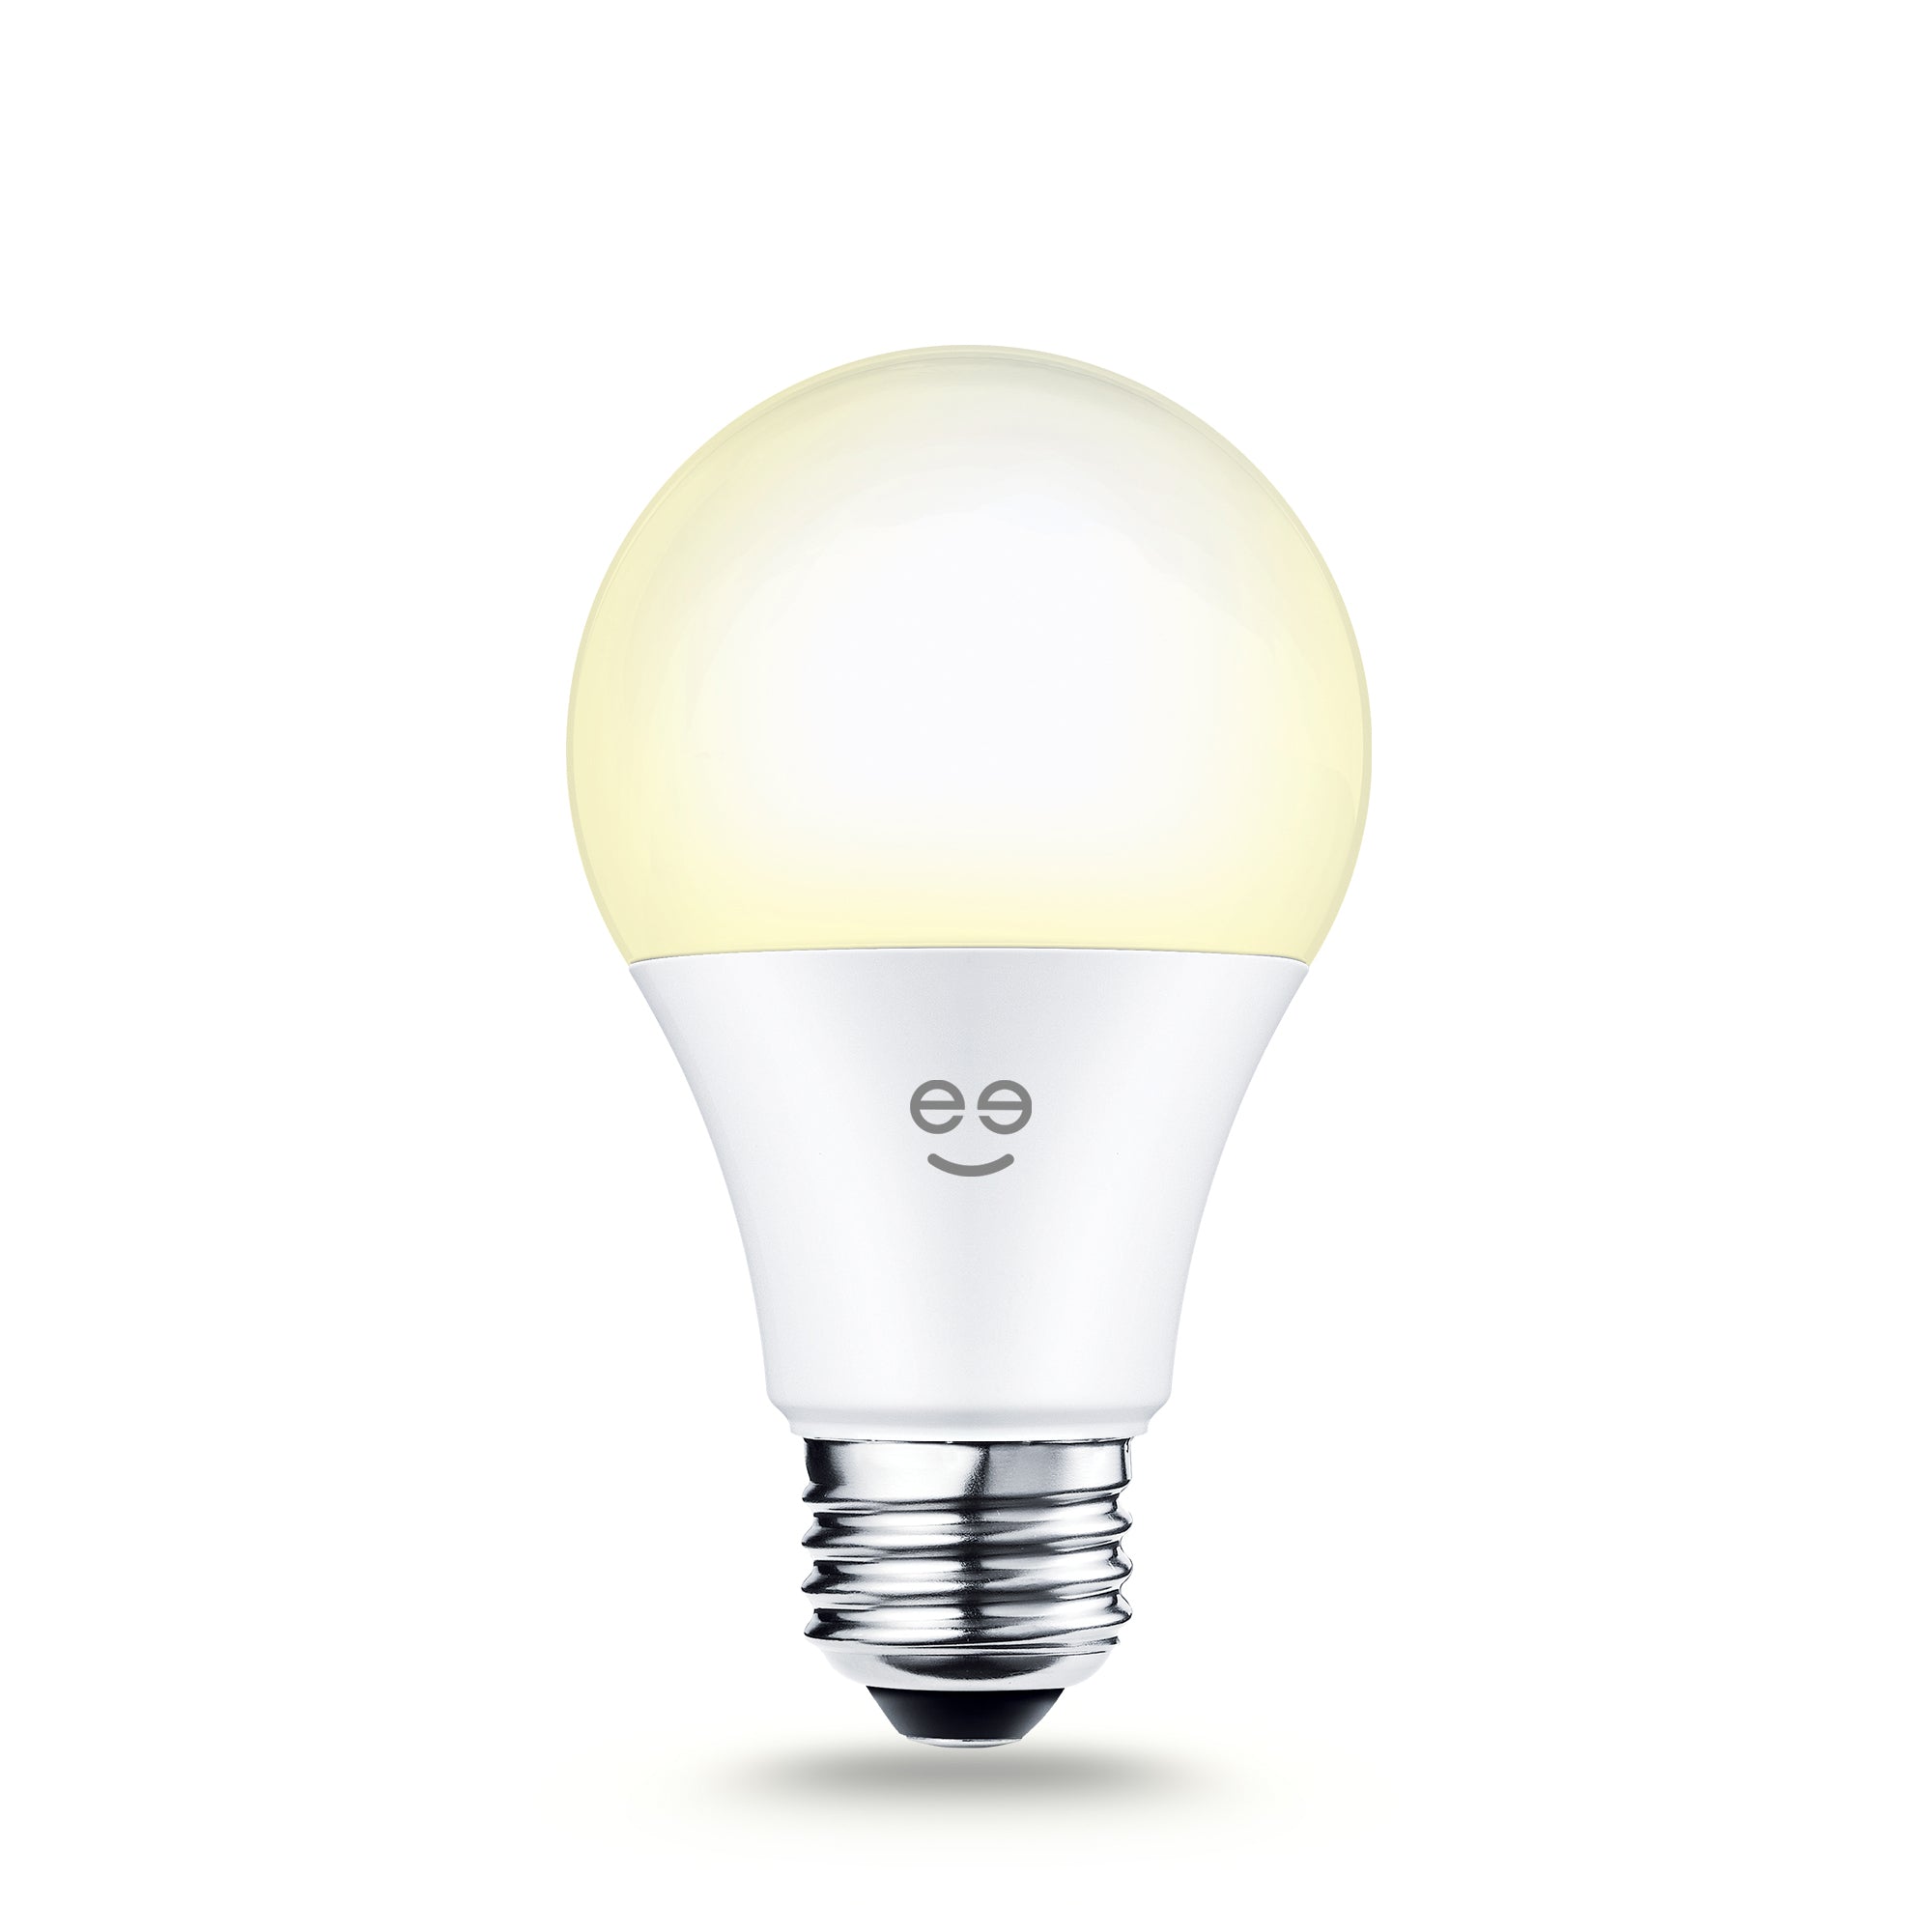 Geeni LUX 800 Warm White A19 E26 Smart LED Bulb